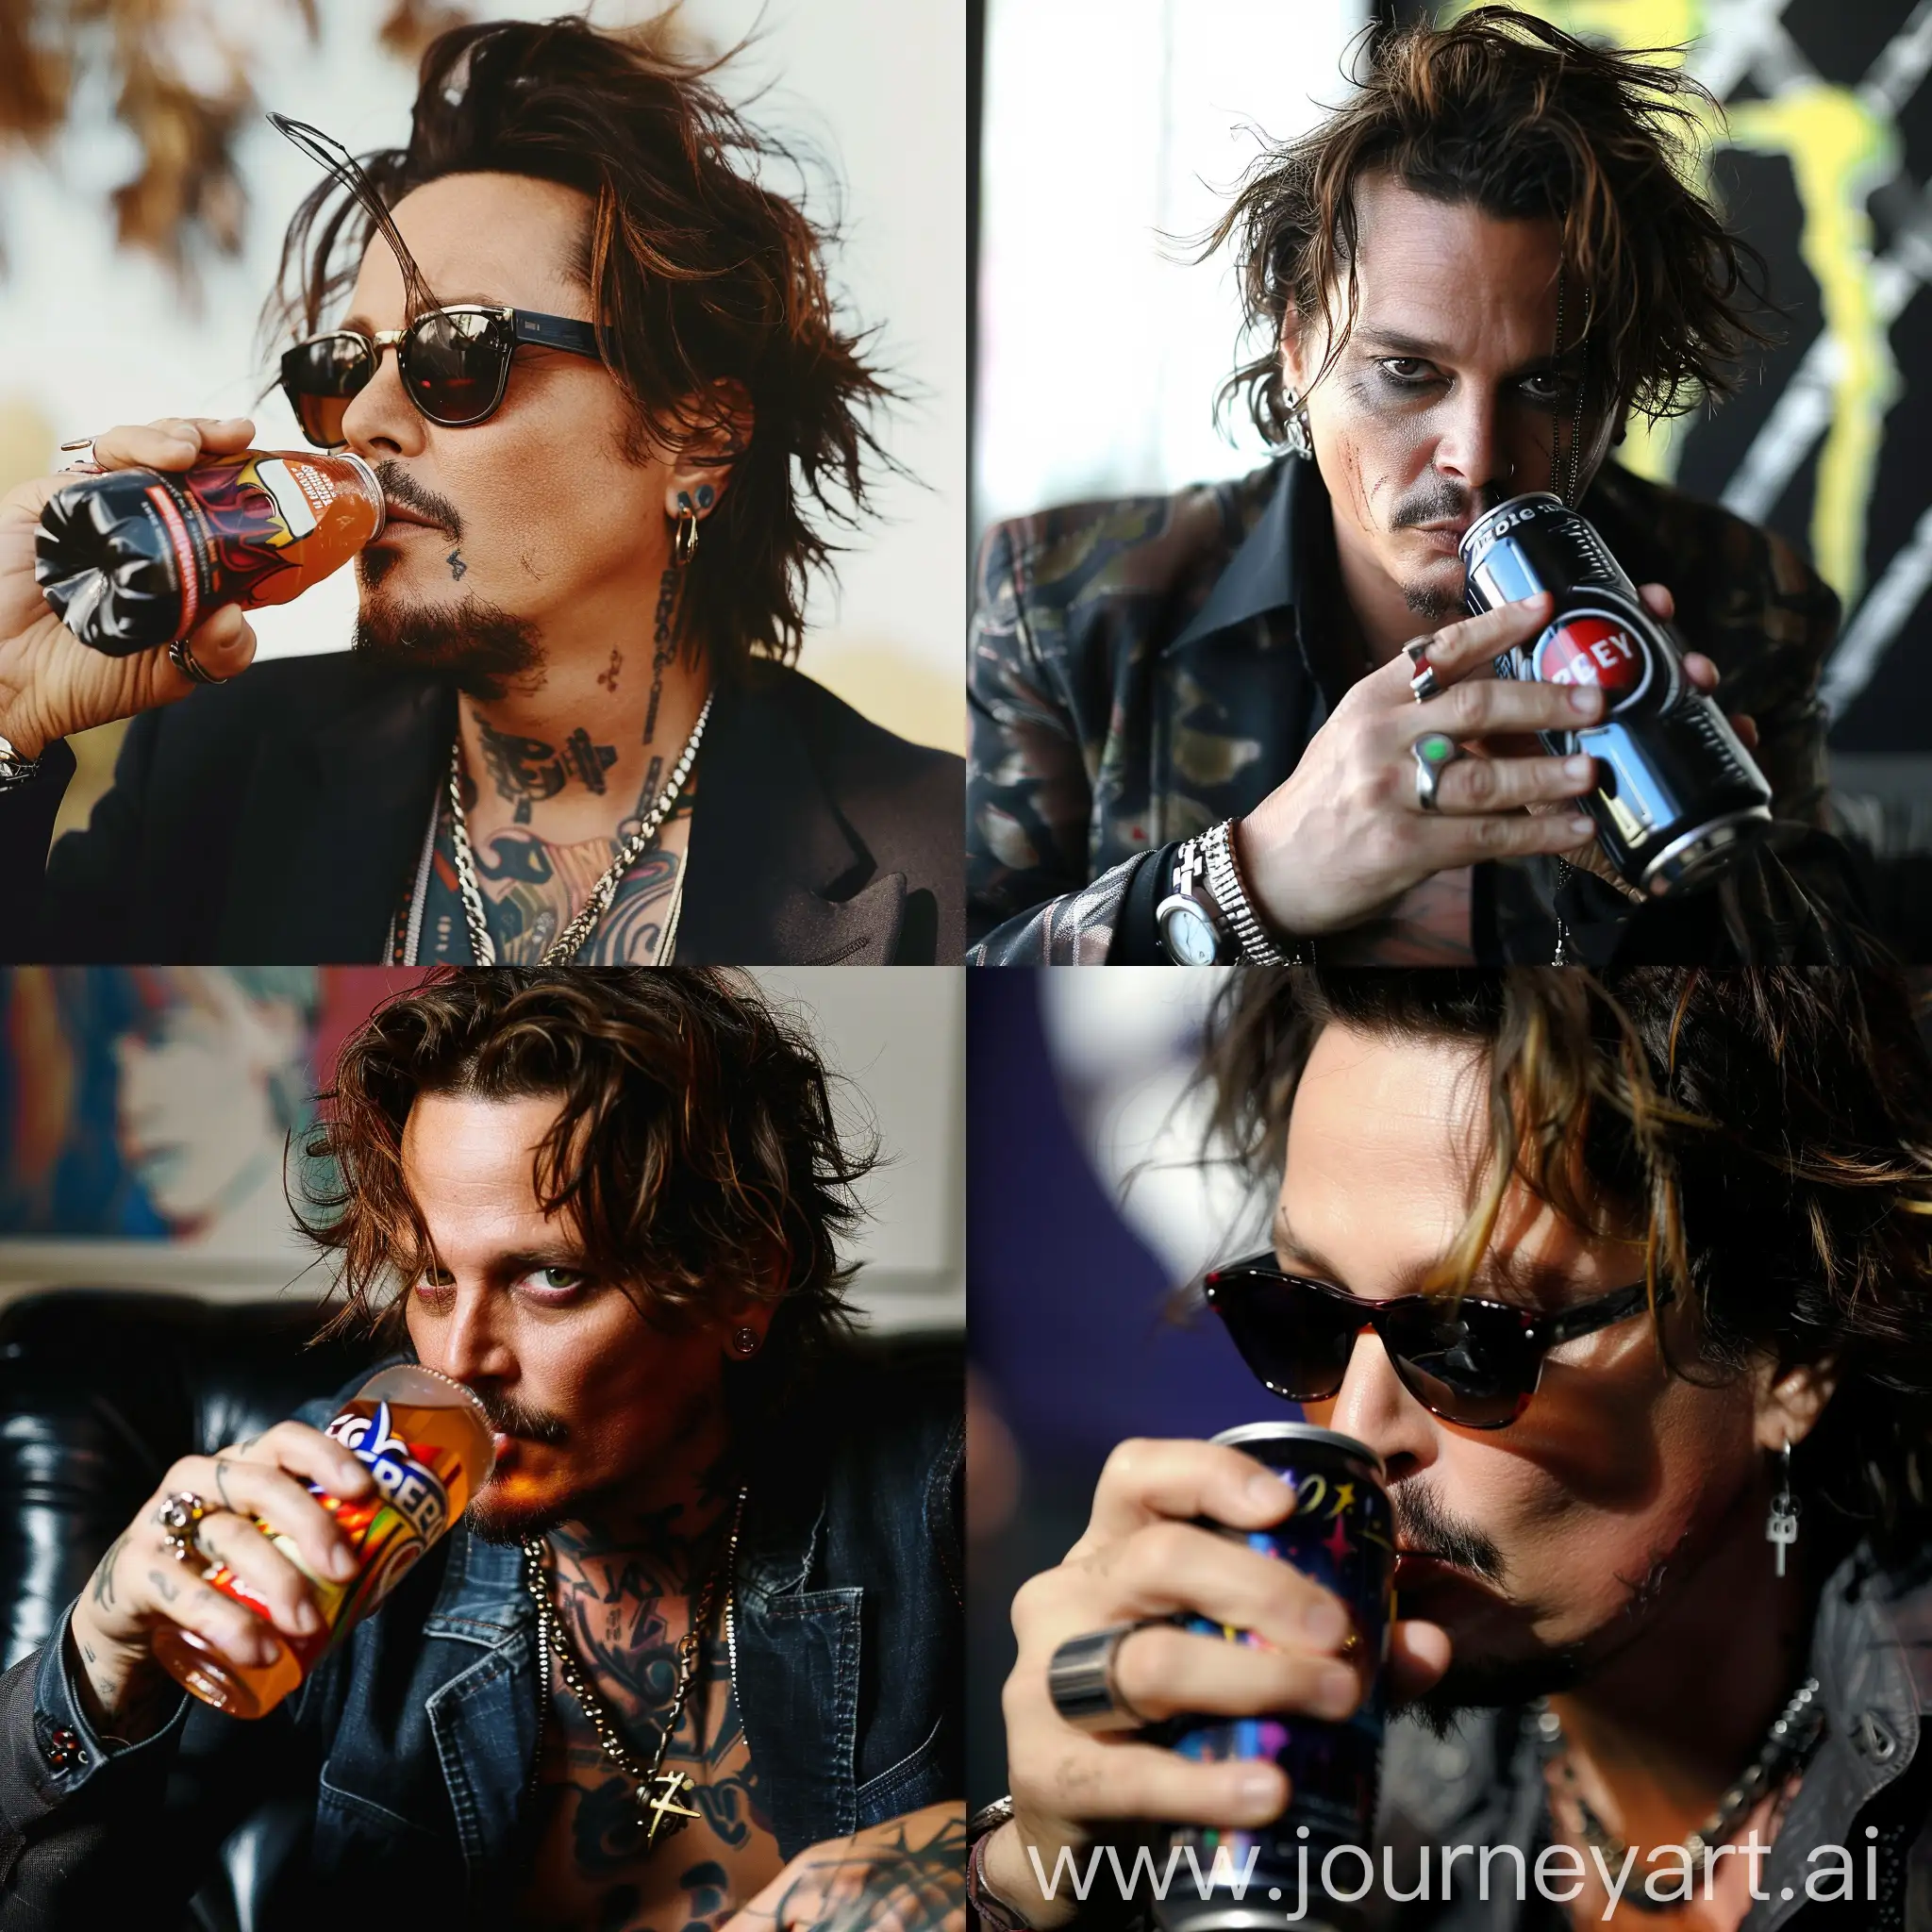 Johnny-Depp-Drinking-Energy-Drink-Portrait